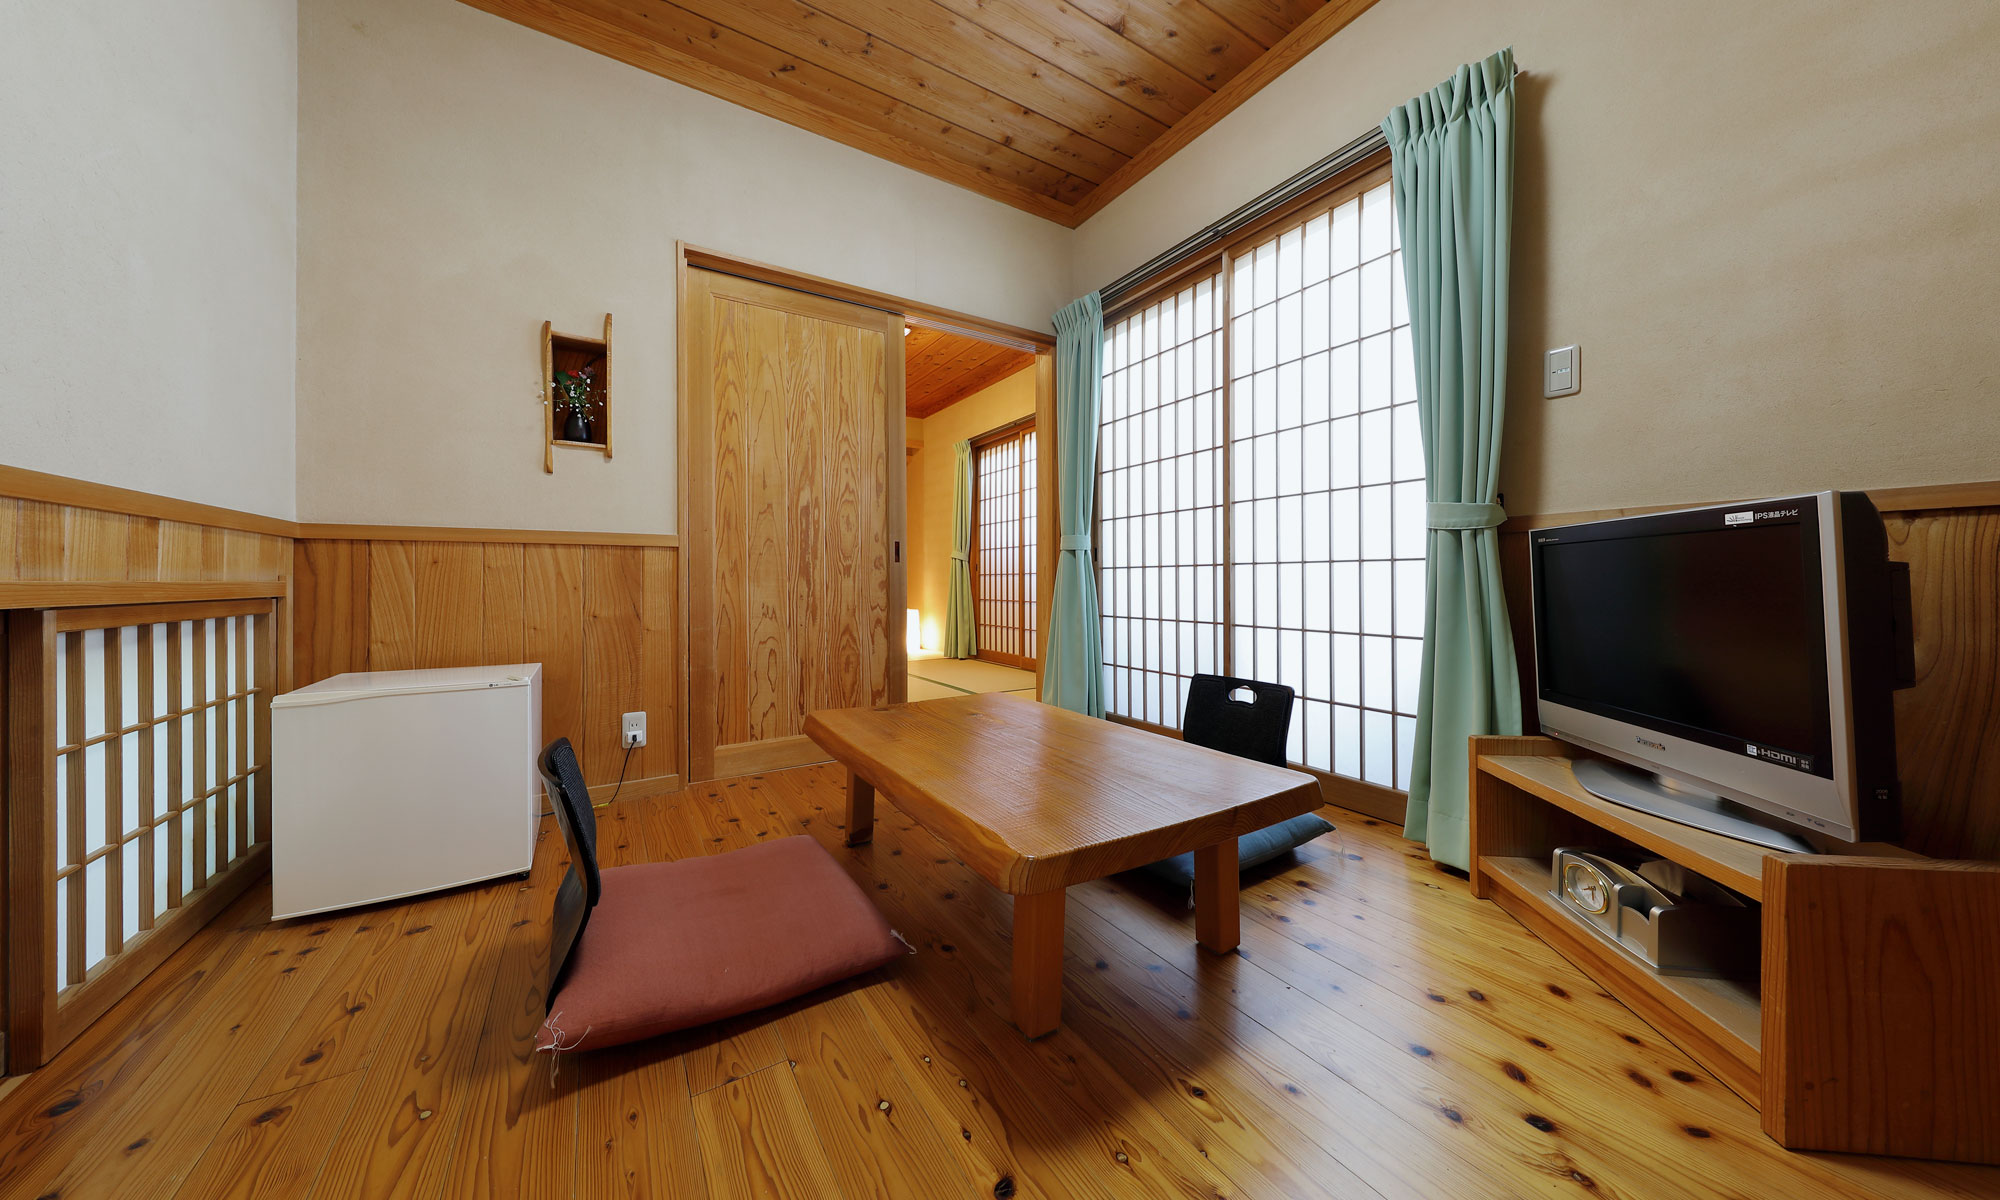 4.5 tatami mats in the antechamber